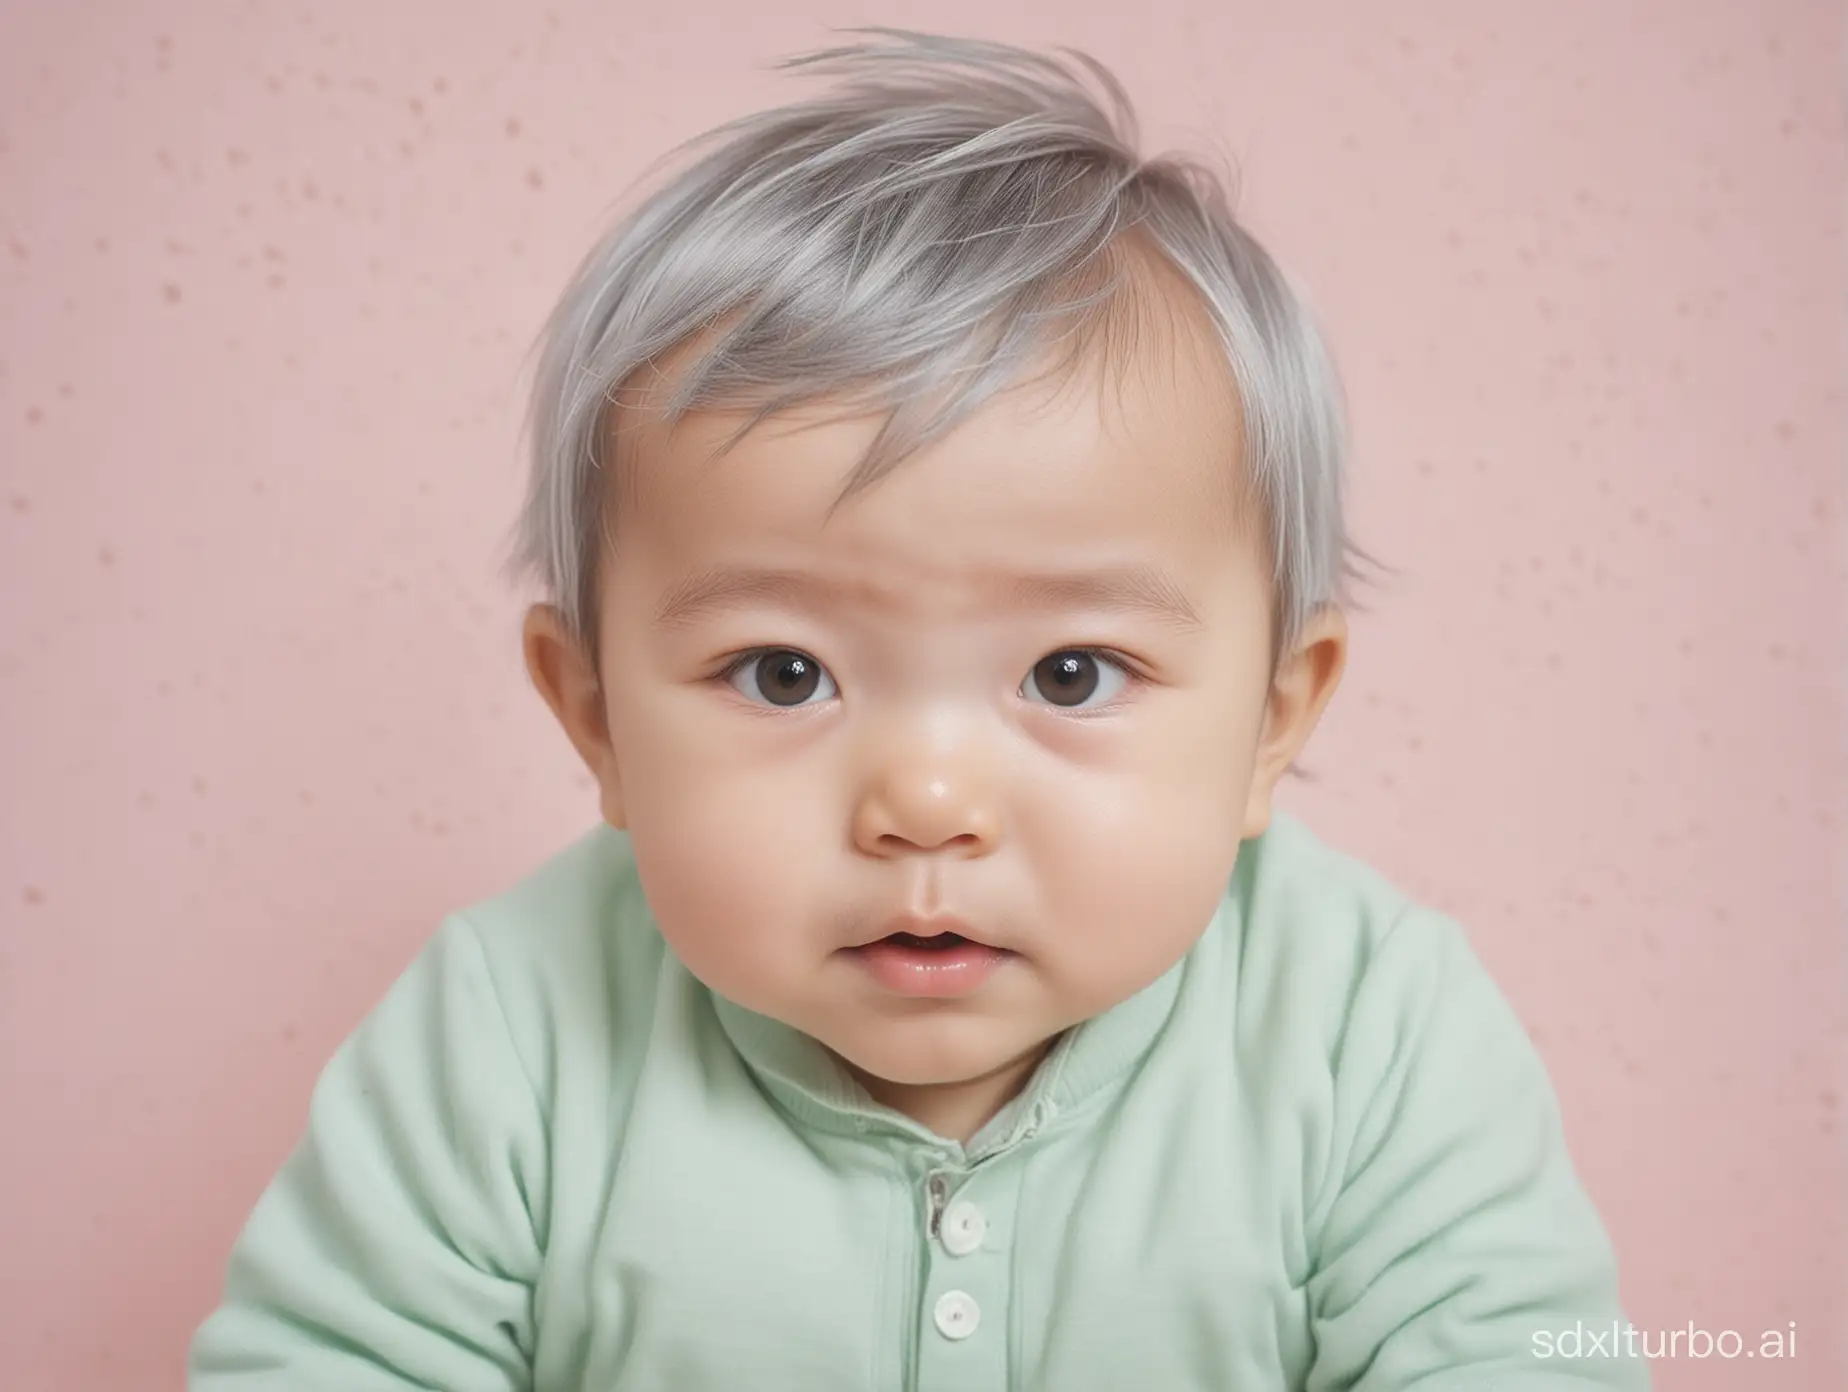 Captivating-Infant-Portrait-by-Inko-Kawauchi